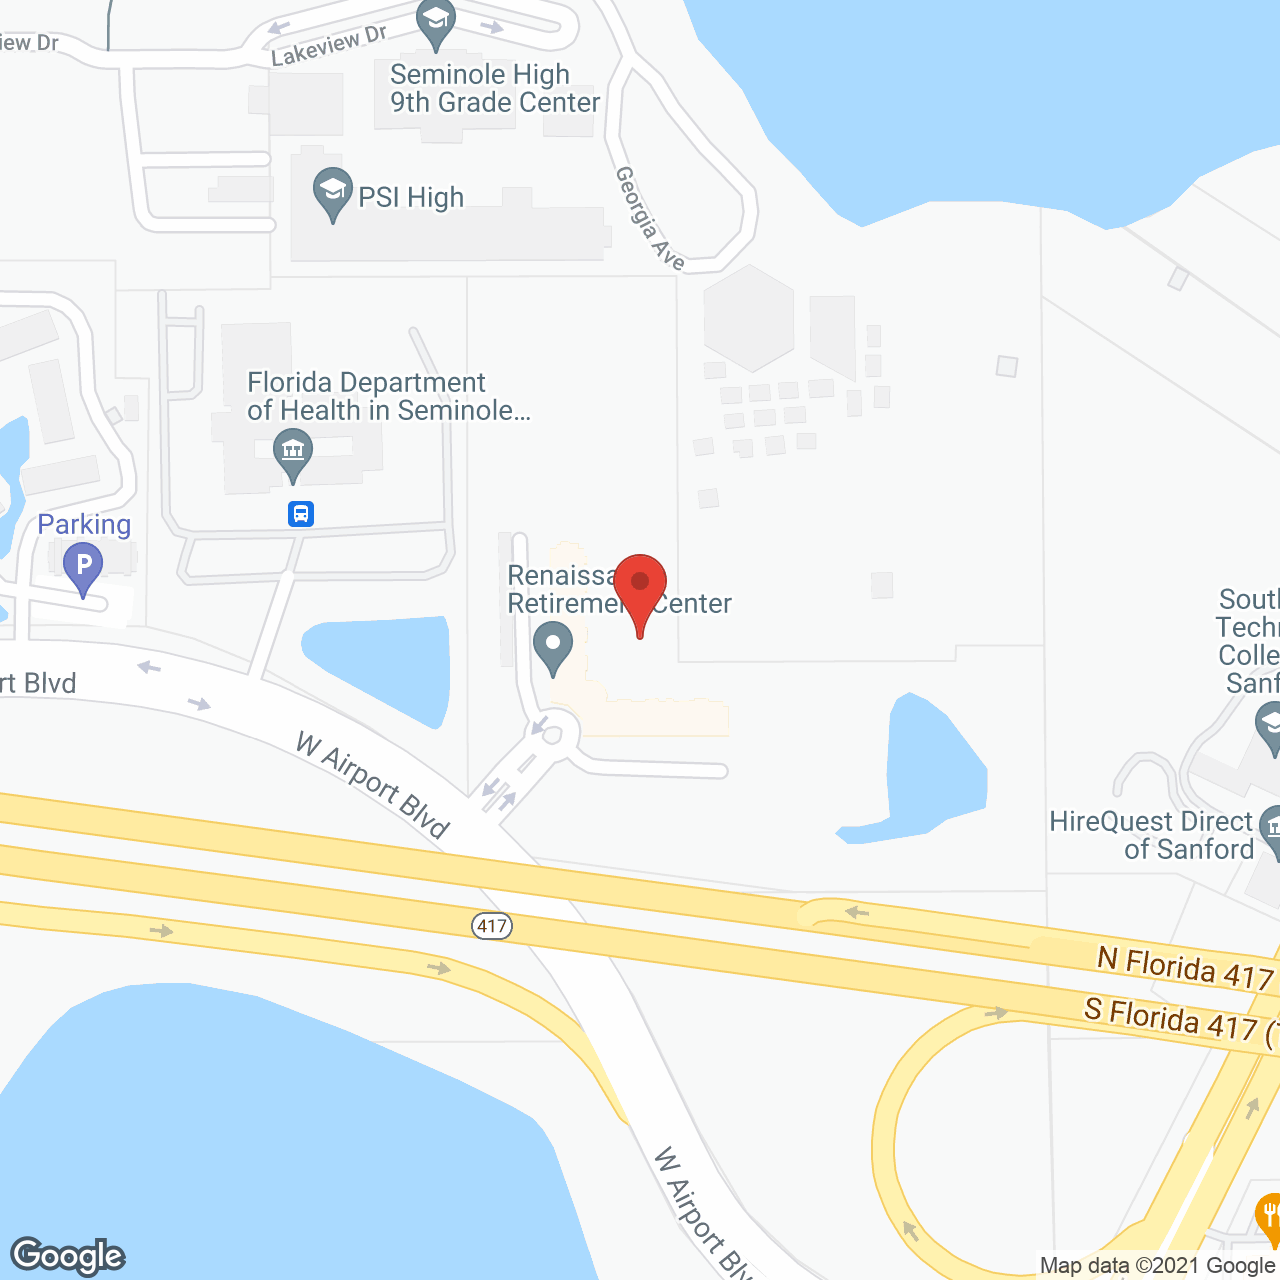 Renaissance Retirement Center in google map